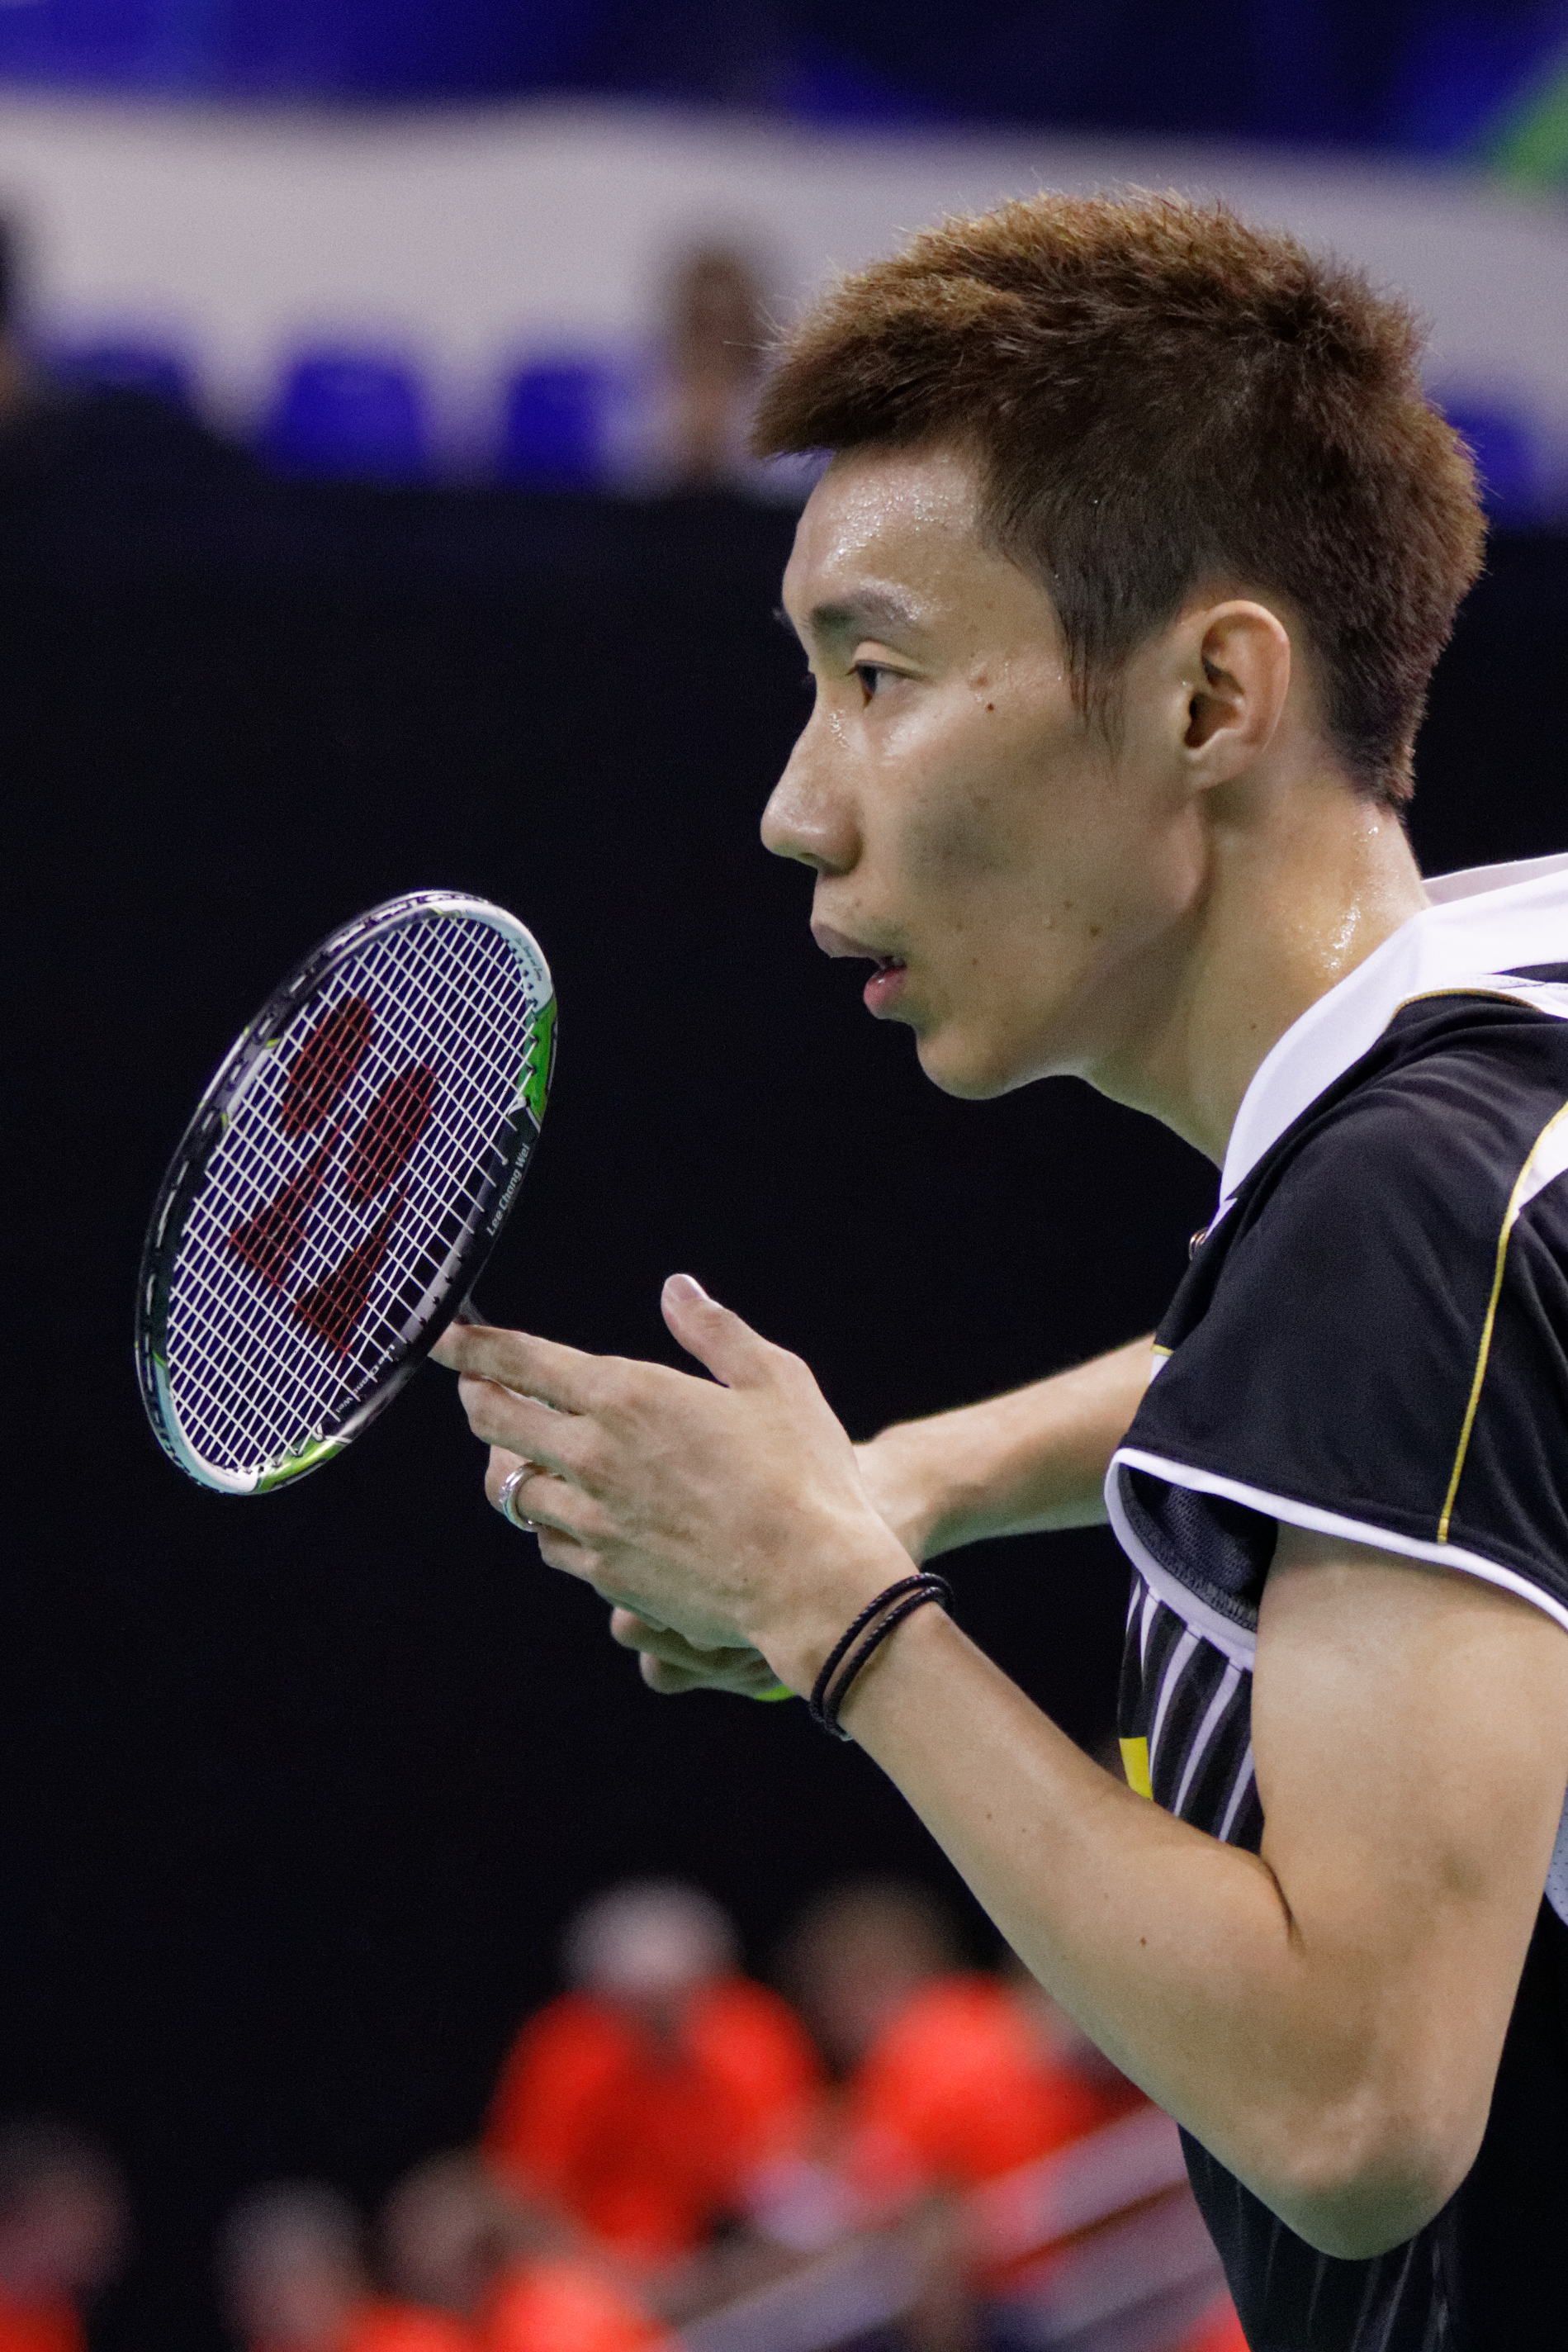 Lee Chong Wei Badminton – A Player Study